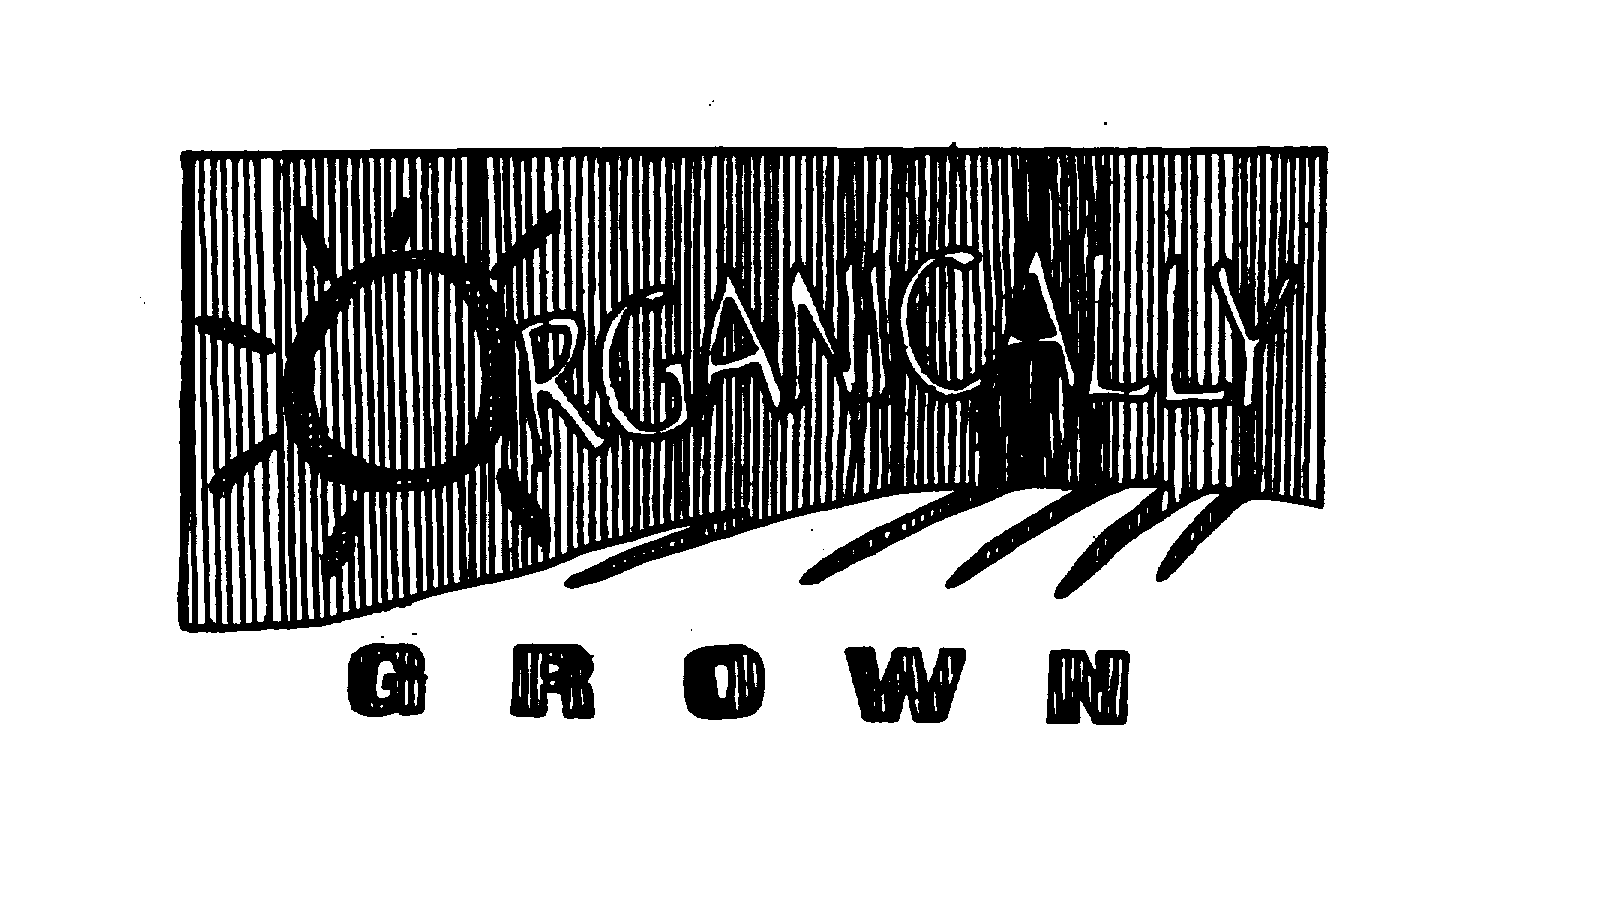 ORGANICALLY GROWN